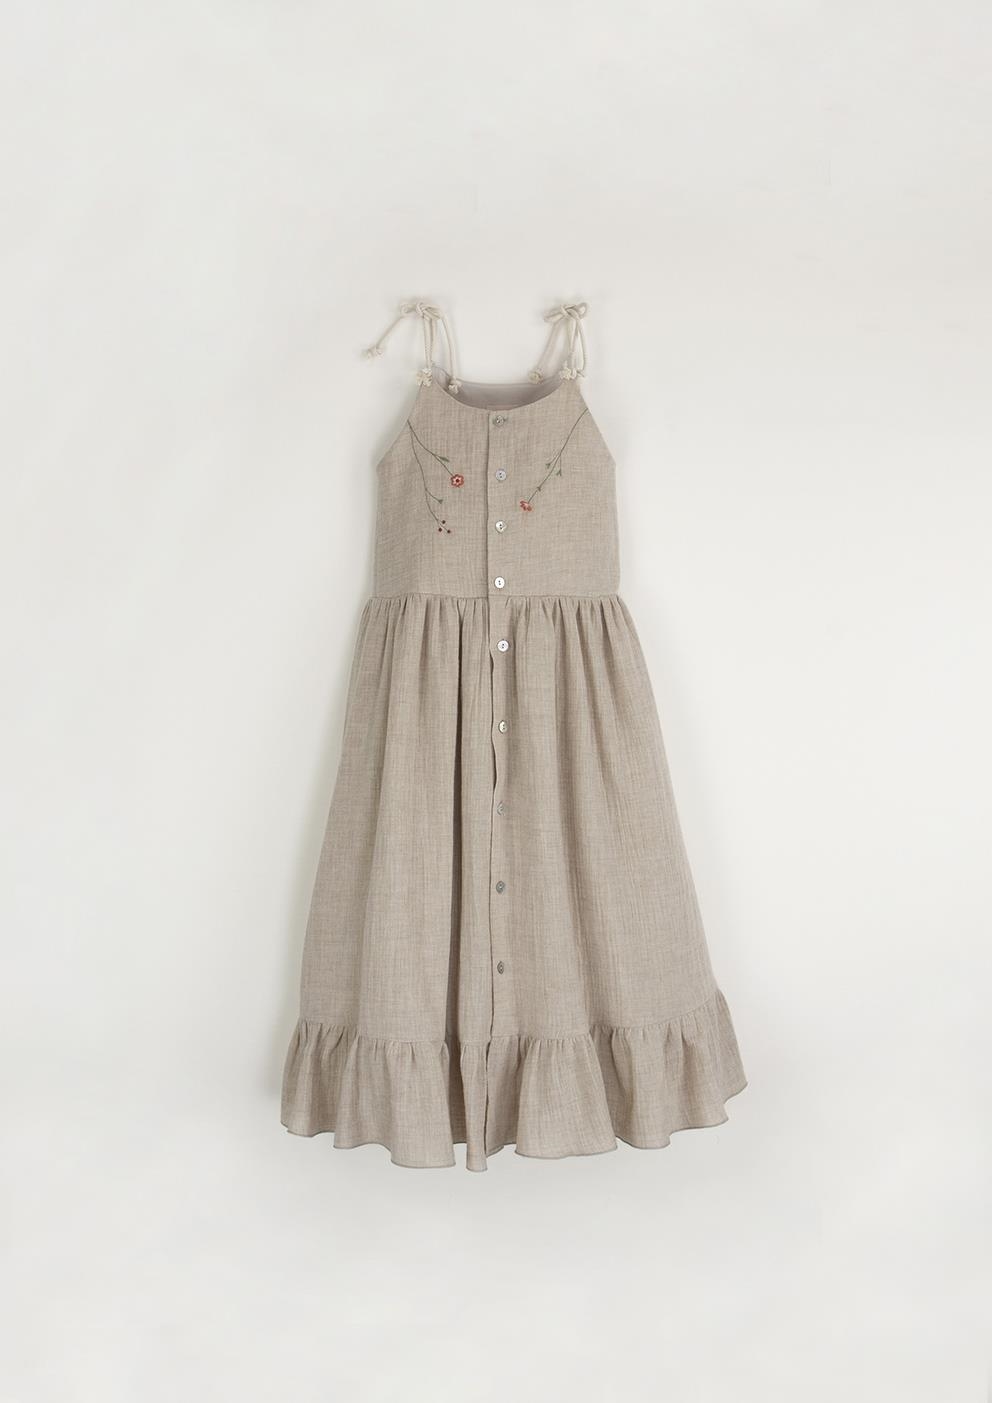 Mod.35.2 Sand organic dress with straps | SS23 Mod.35.2 Sand organic dress with straps